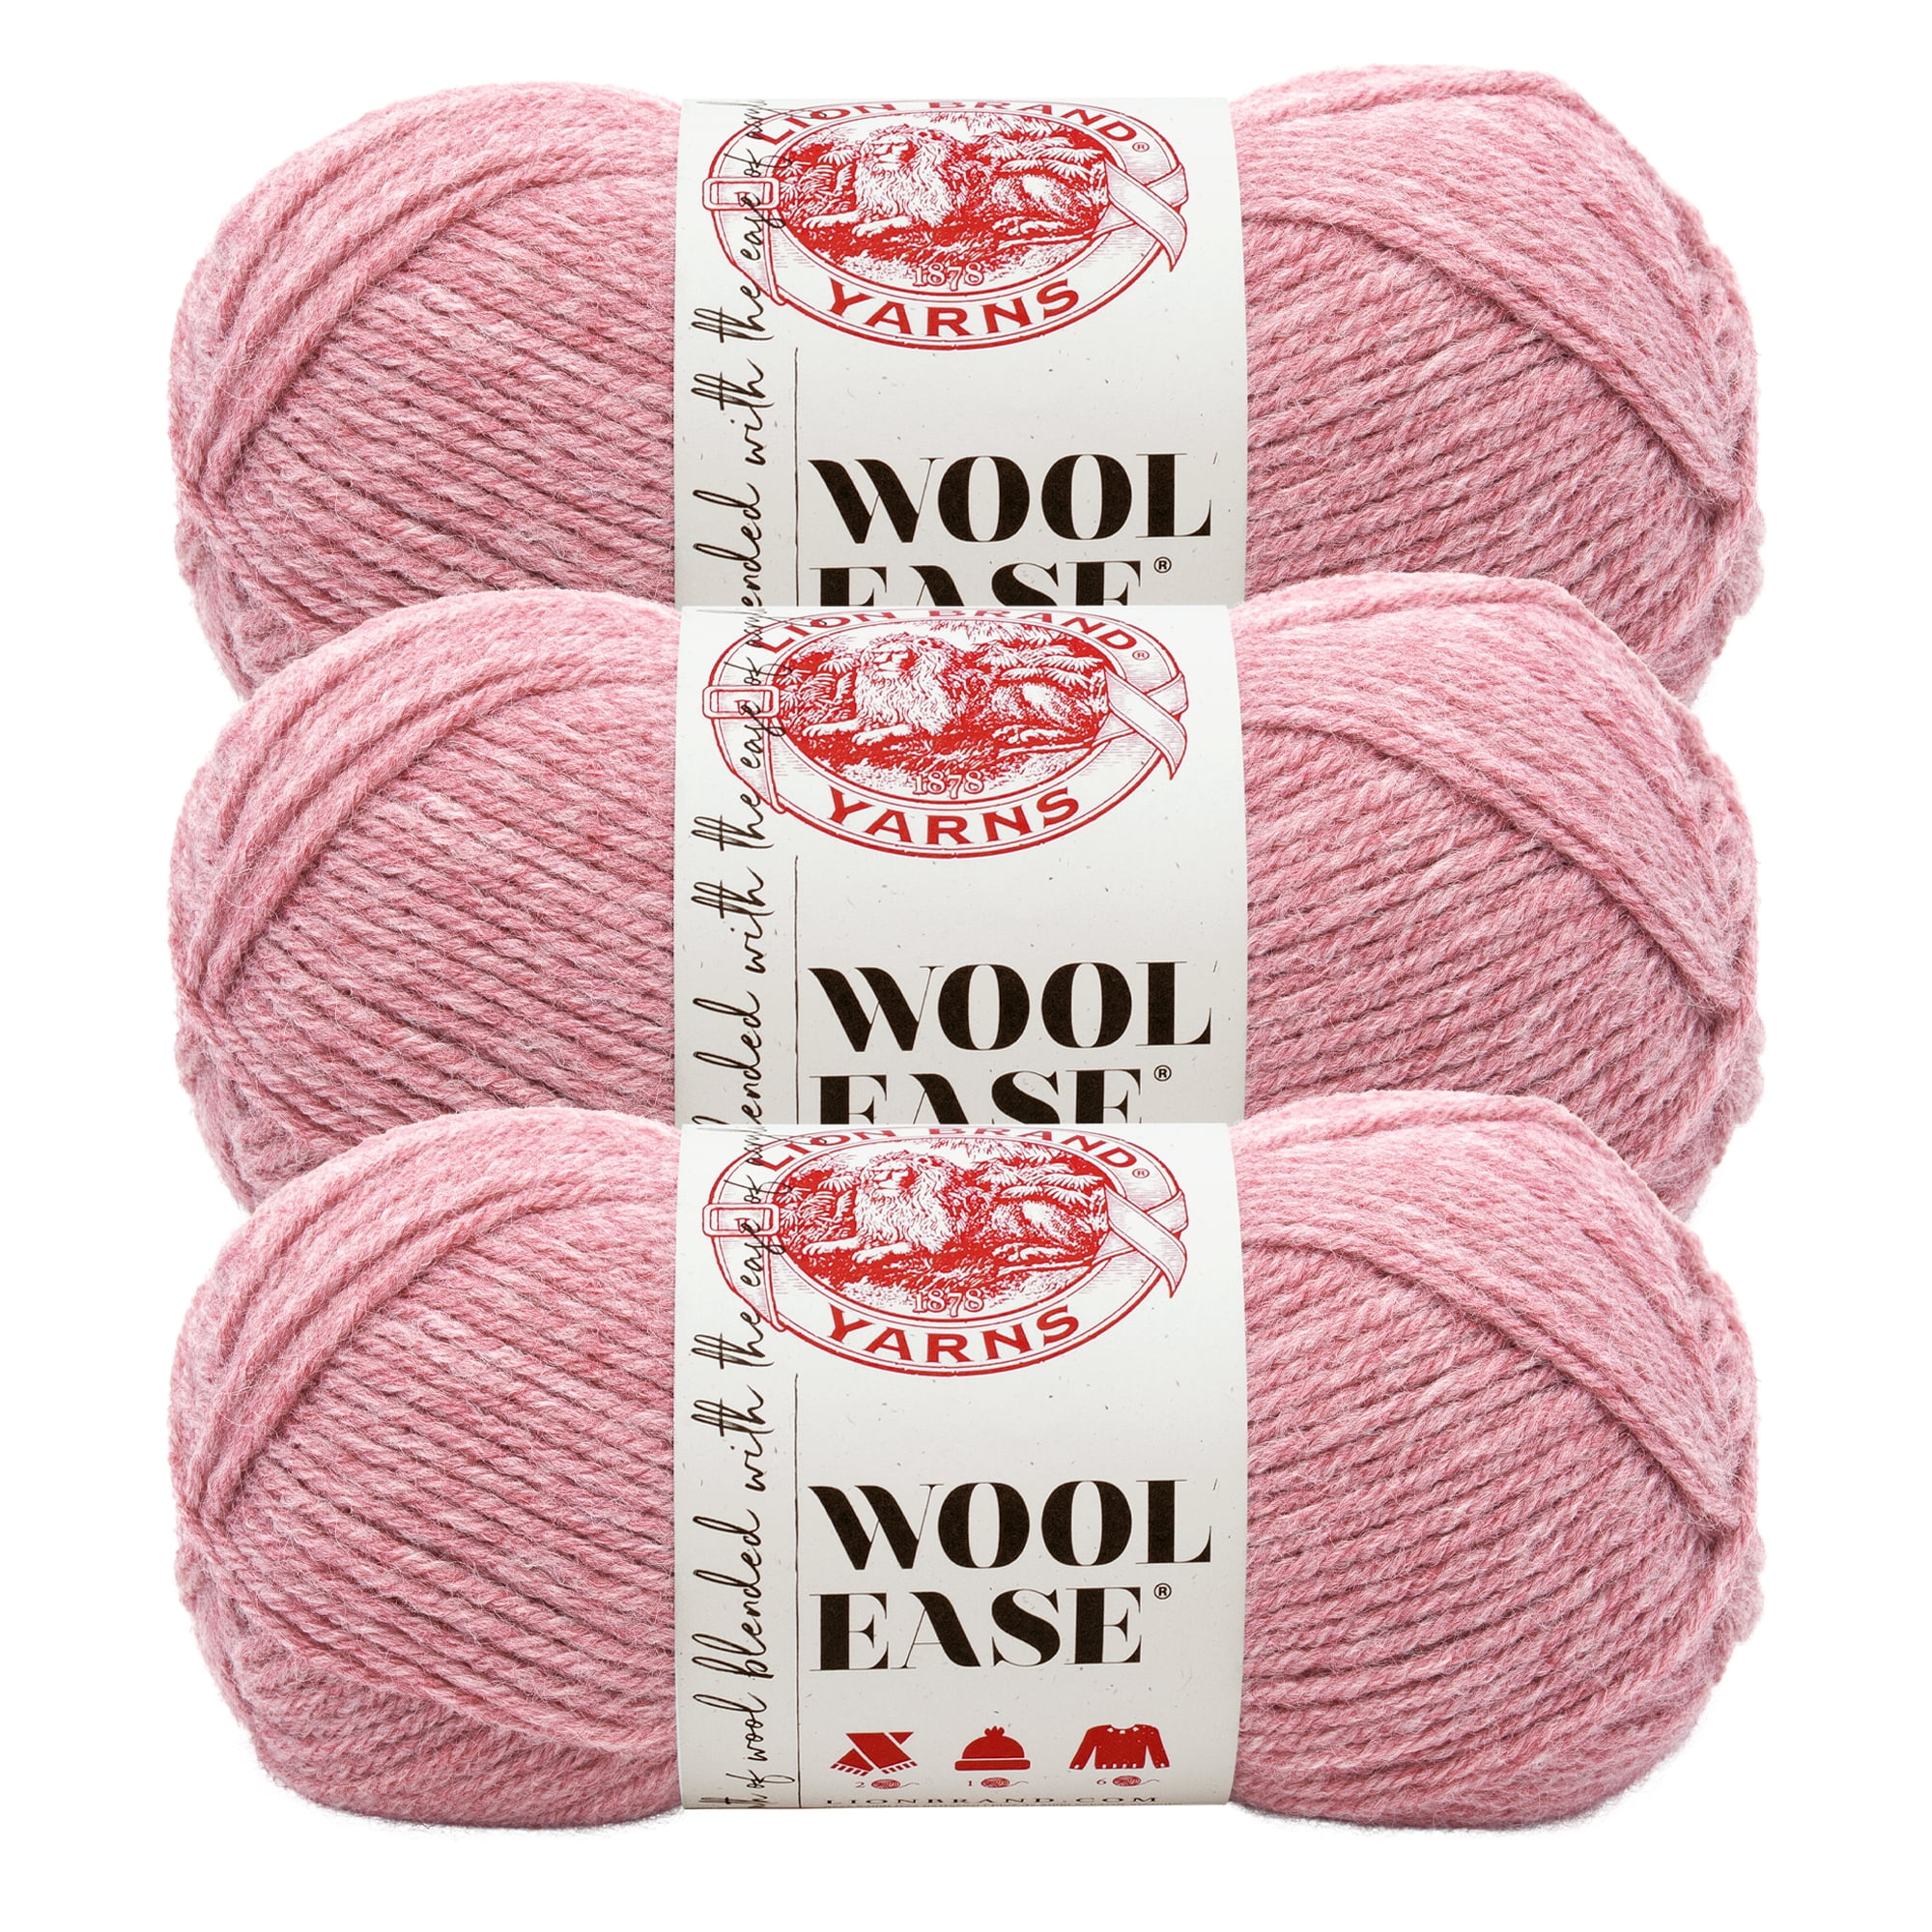 After Wash Yarn Bee Review - Wool yarn, Acrylic & Nylon Blend